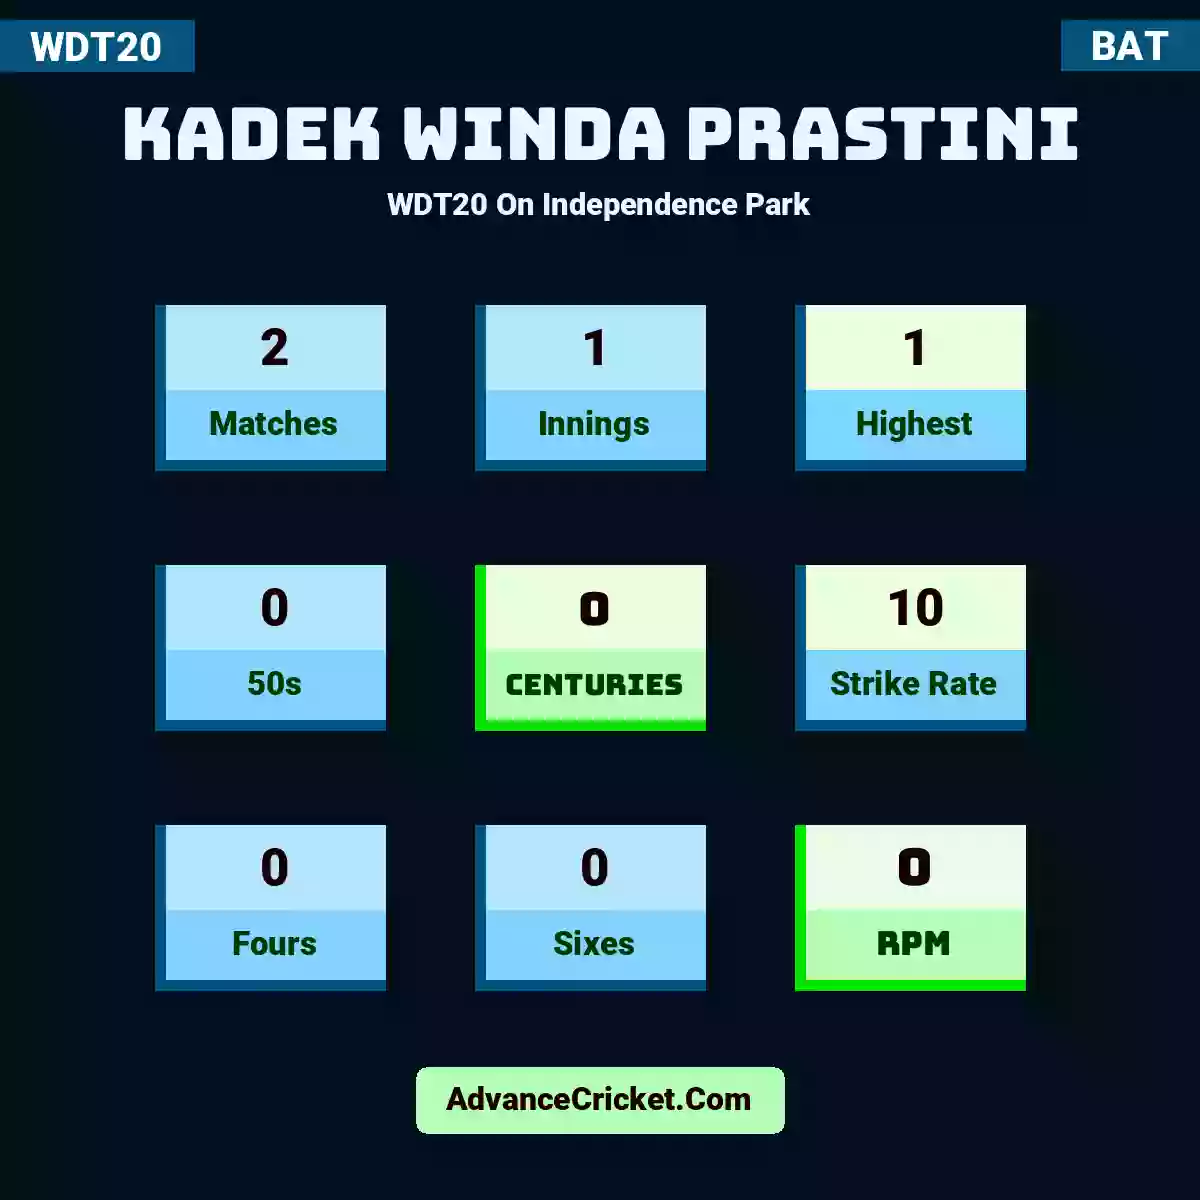 Kadek Winda Prastini WDT20  On Independence Park, Kadek Winda Prastini played 2 matches, scored 1 runs as highest, 0 half-centuries, and 0 centuries, with a strike rate of 10. K.Winda.Prastini hit 0 fours and 0 sixes, with an RPM of 0.